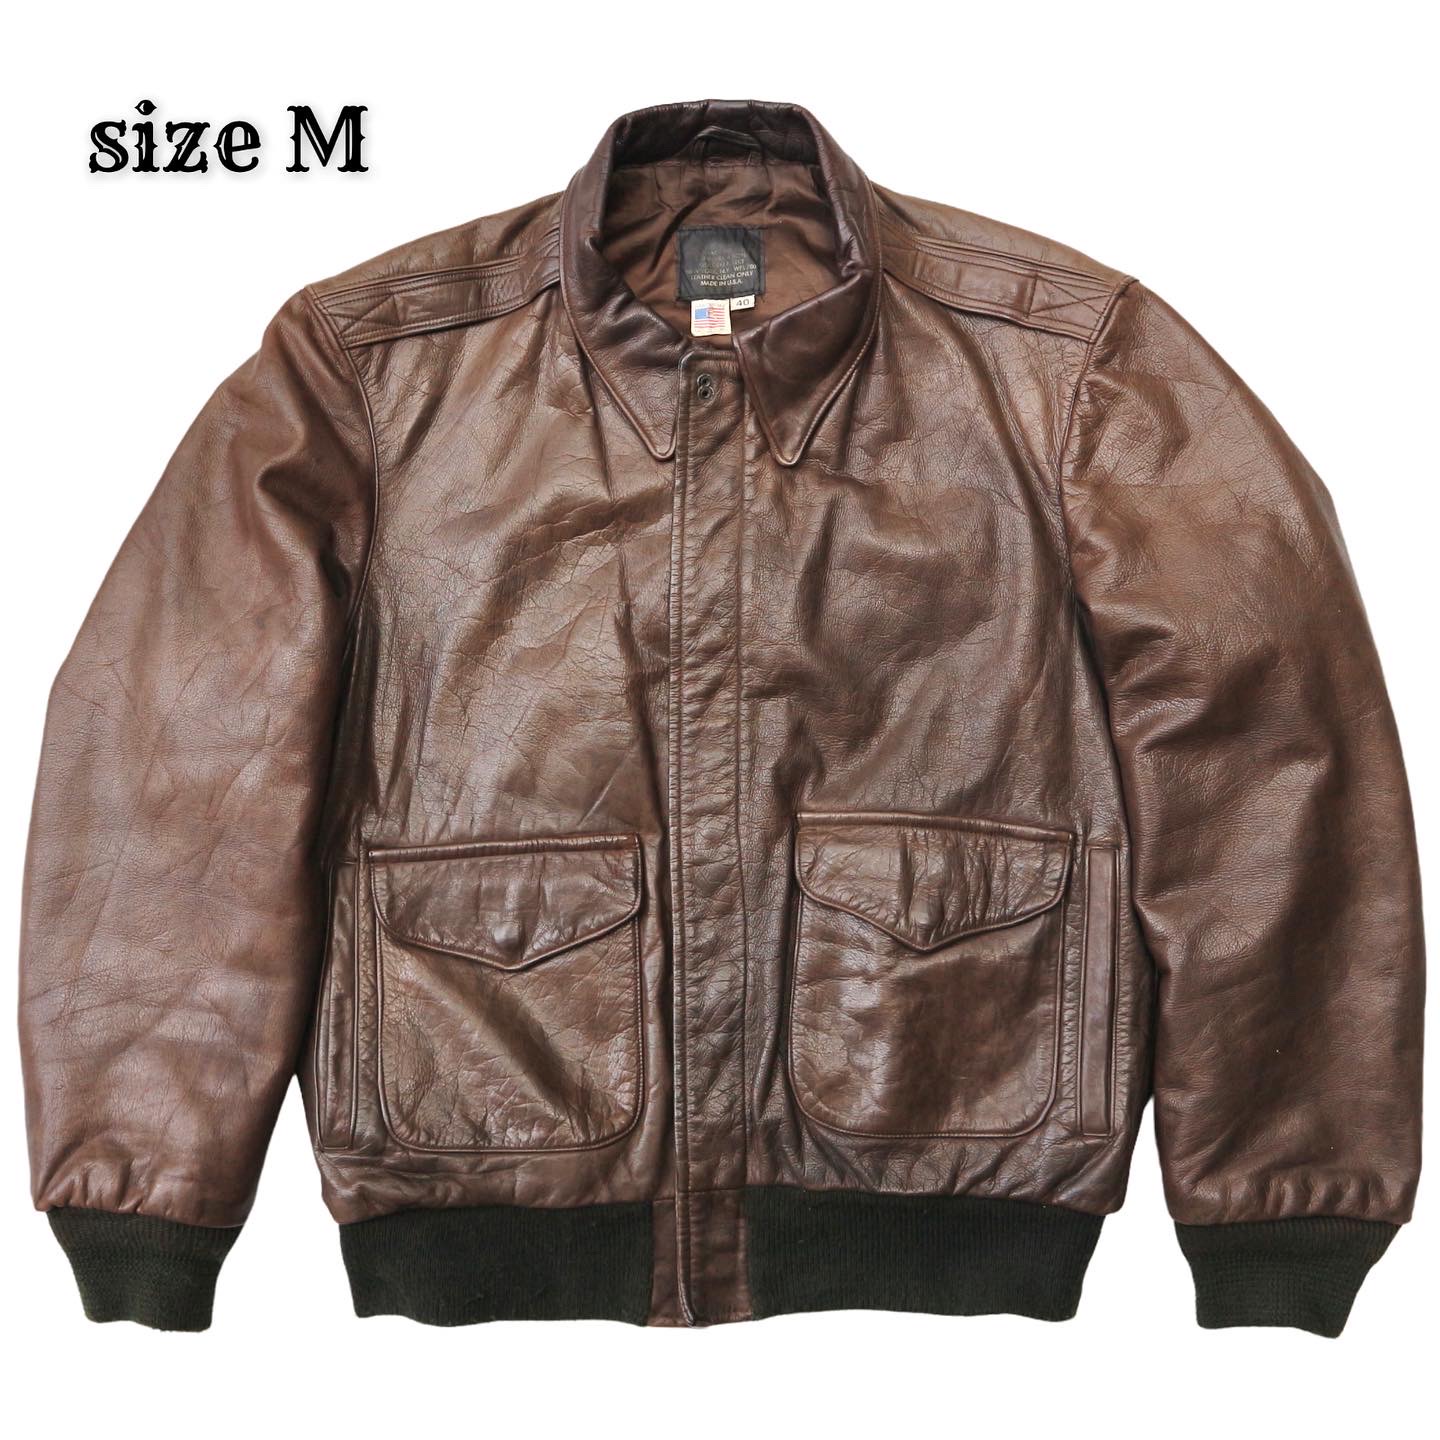 Spiewak & Sons A2 Leather Jacket